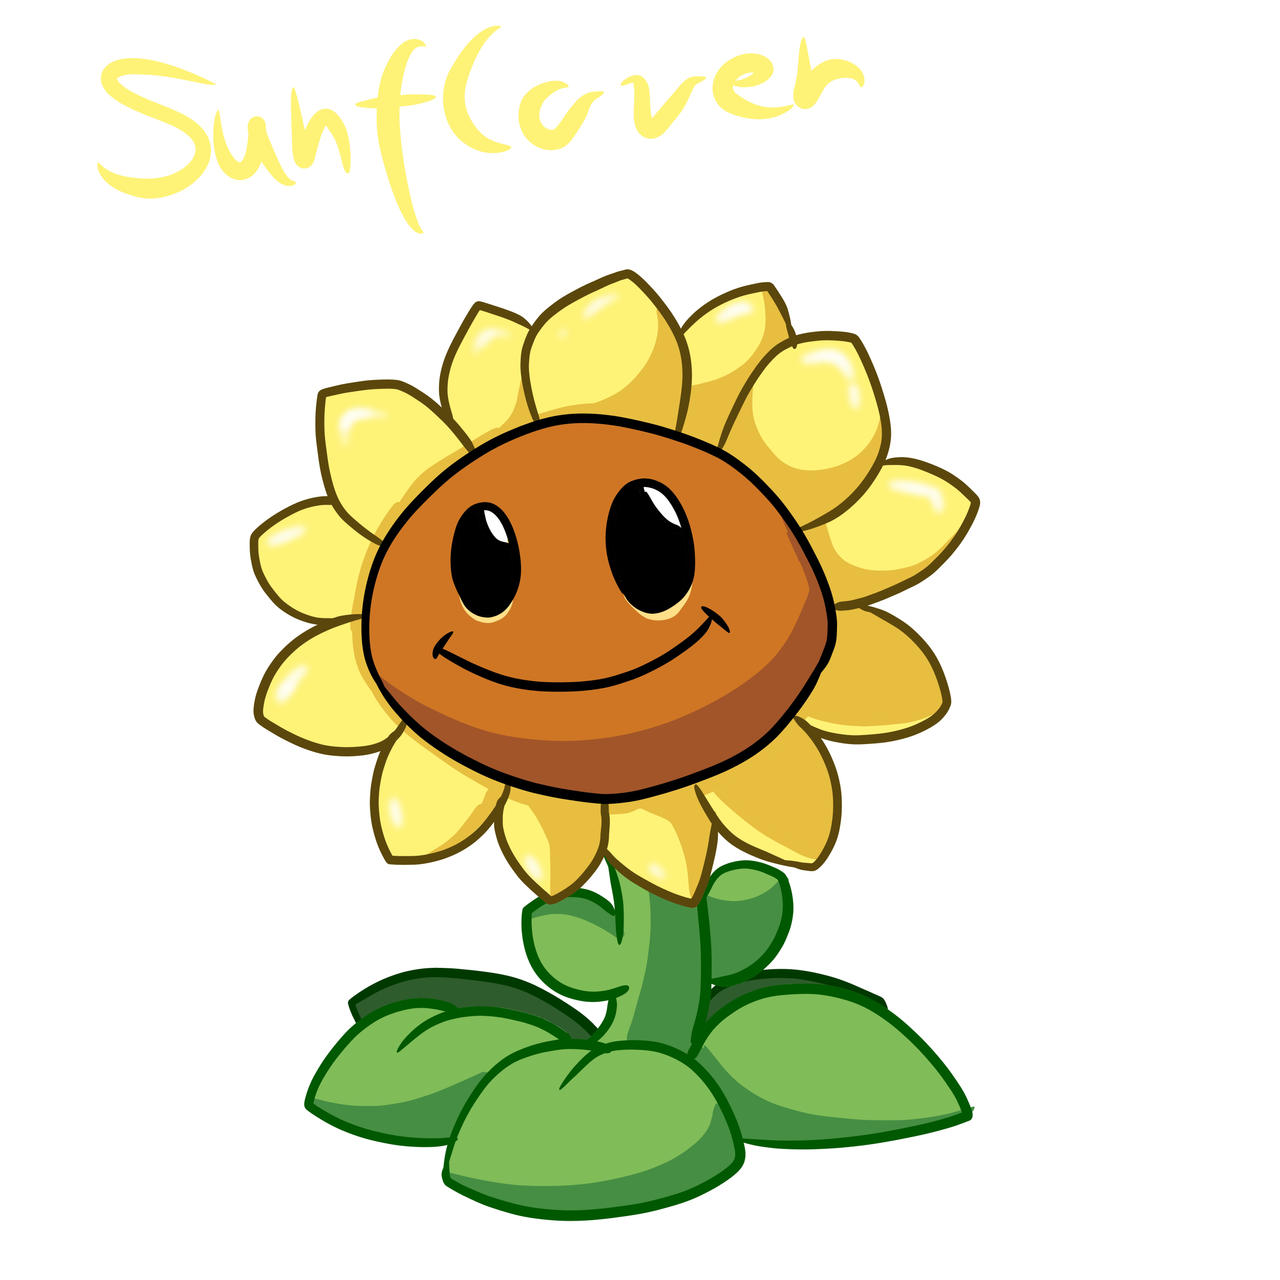 Sunflower - PvZ2 Fanart by HyperspacialArtist -- Fur Affinity [dot] net